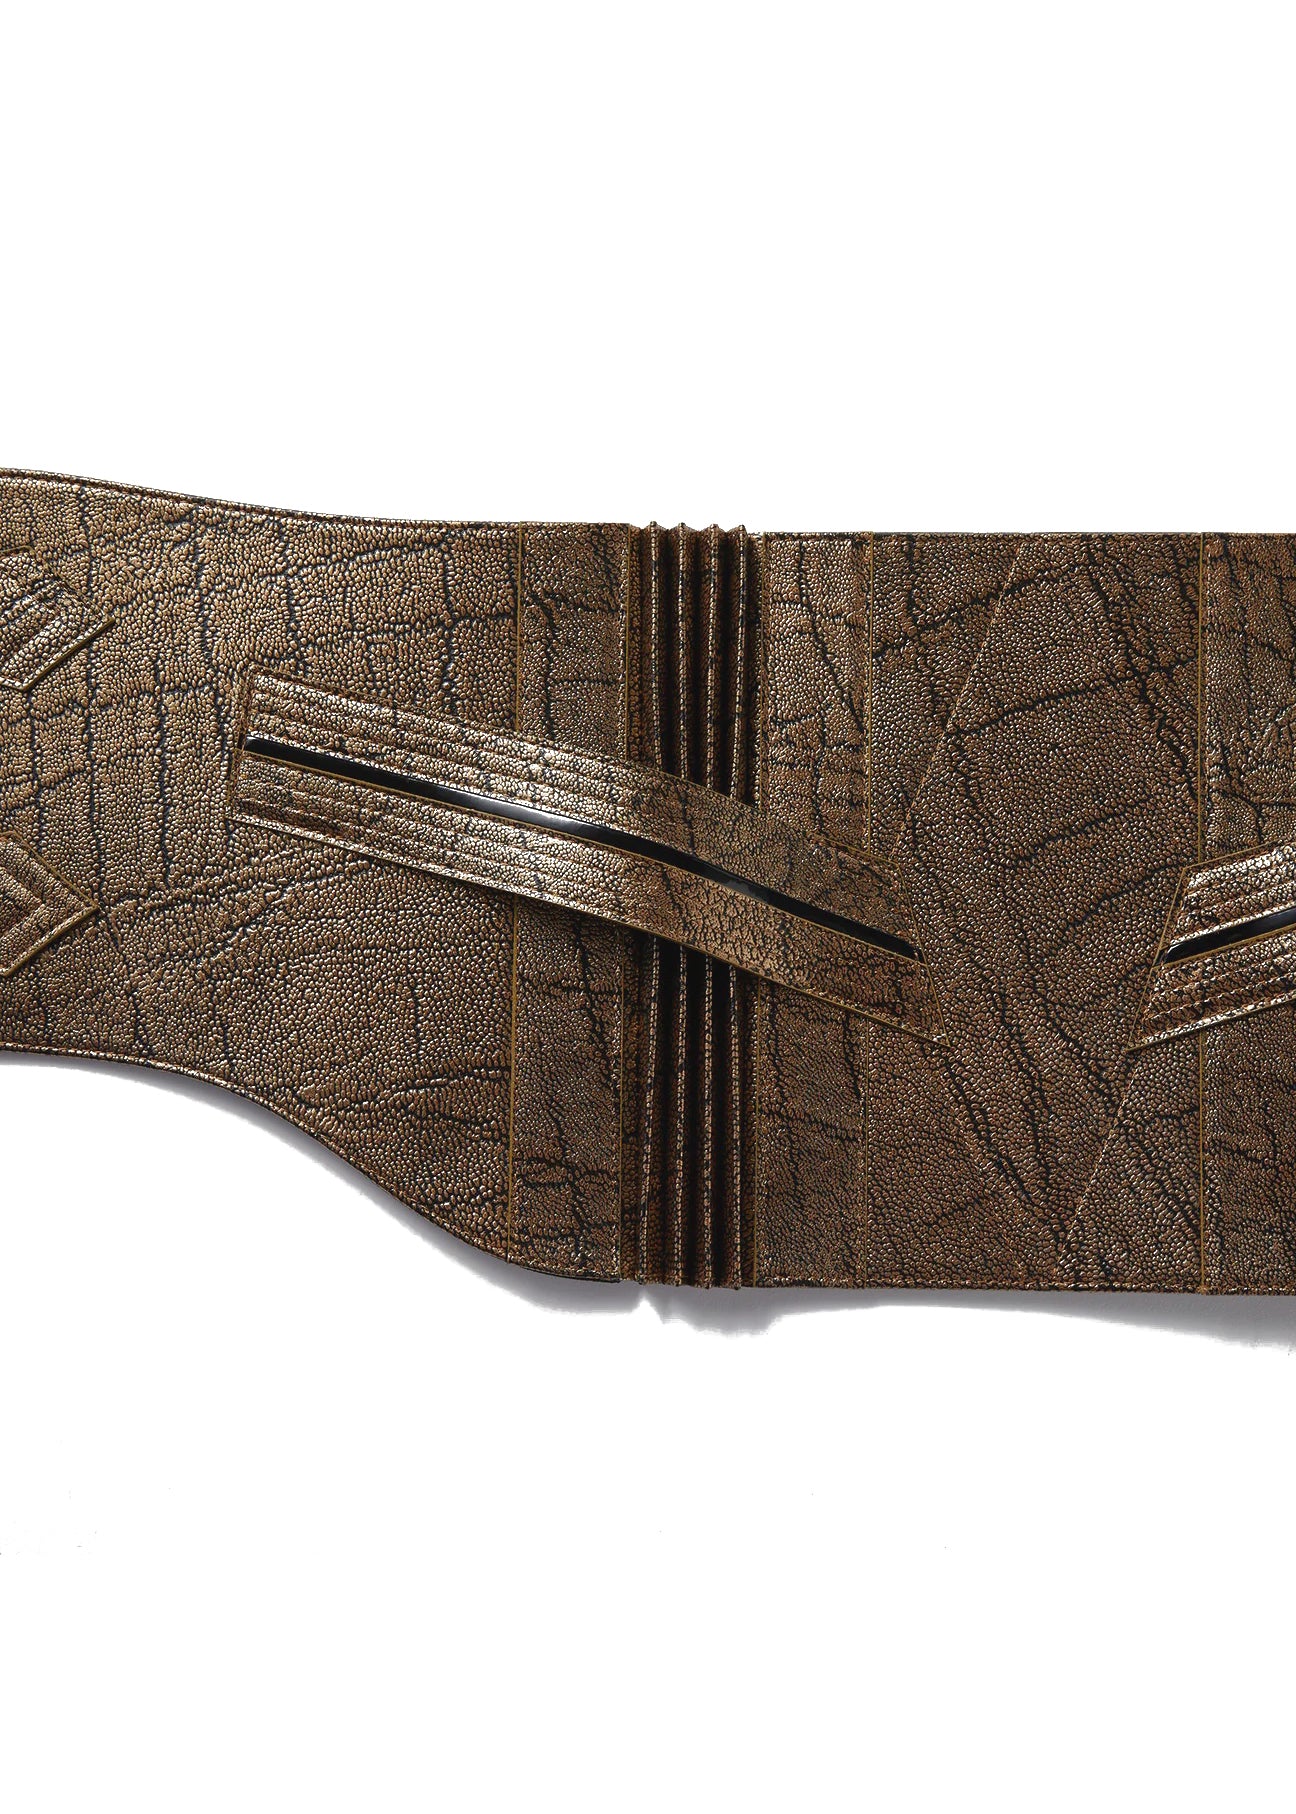 KAPUKI Original Obi Belt Leather "Elephant Gold"